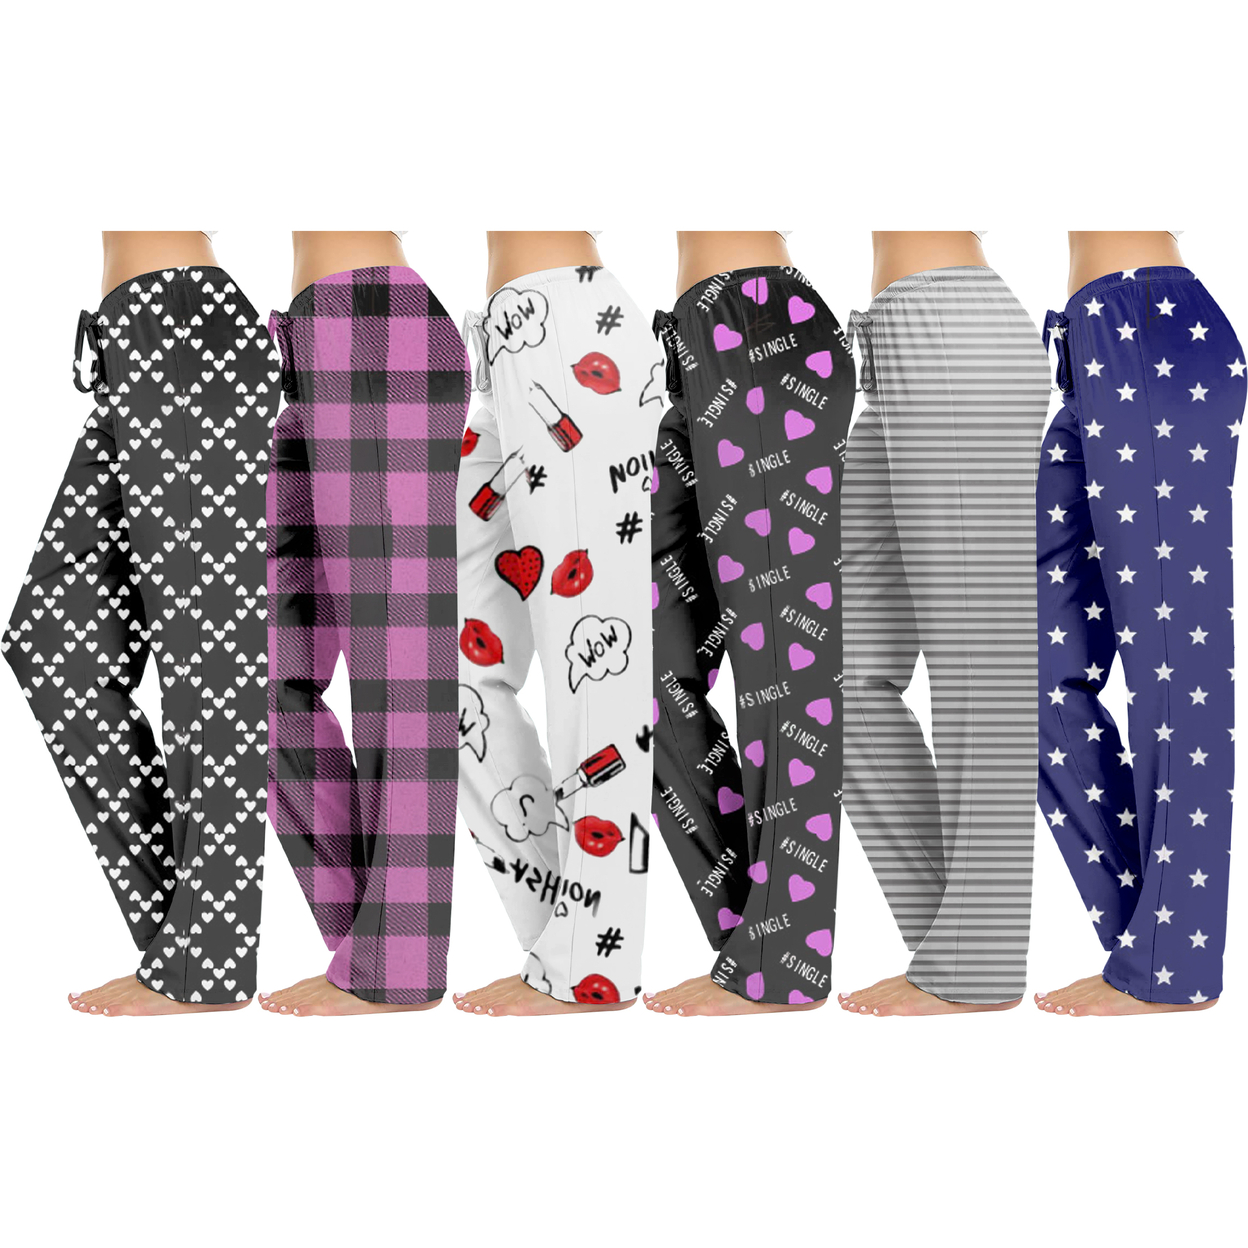 5-Pack: Women's Casual Fun Printed Lightweight Lounge Terry Knit Pajama Bottom Pants - Large, Love